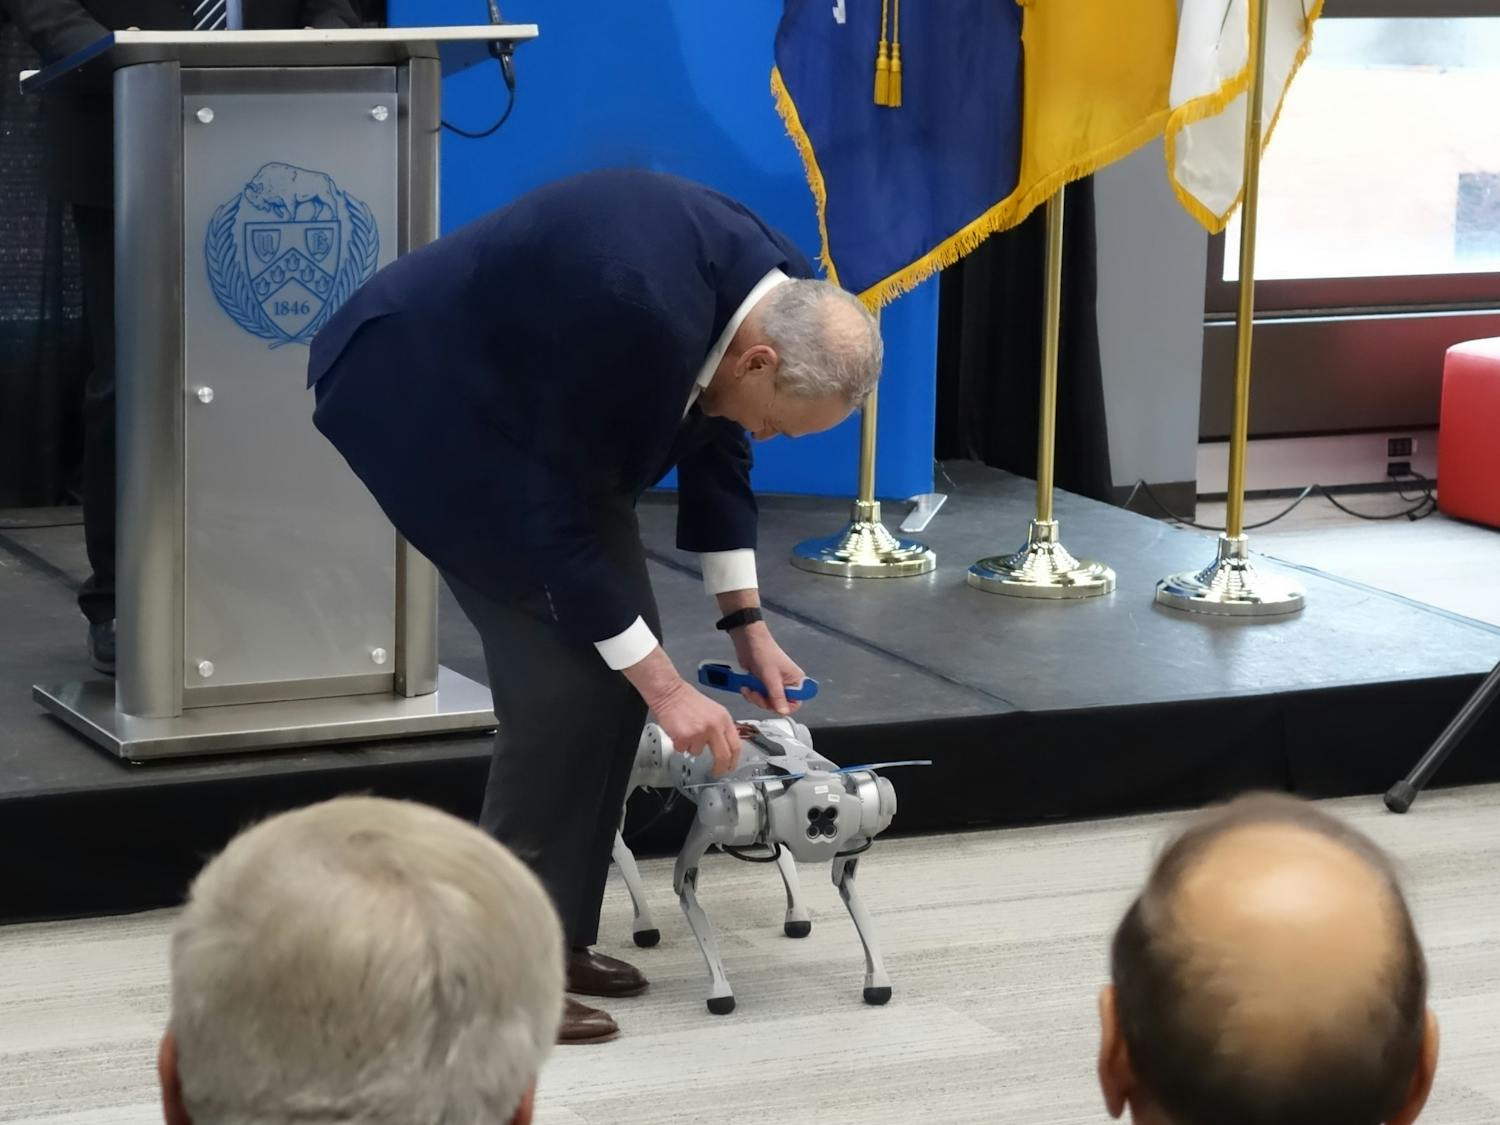 Senator Chuck Schumer put solar eclipse glasses on the "head" of UB's robot dog, "Spark."